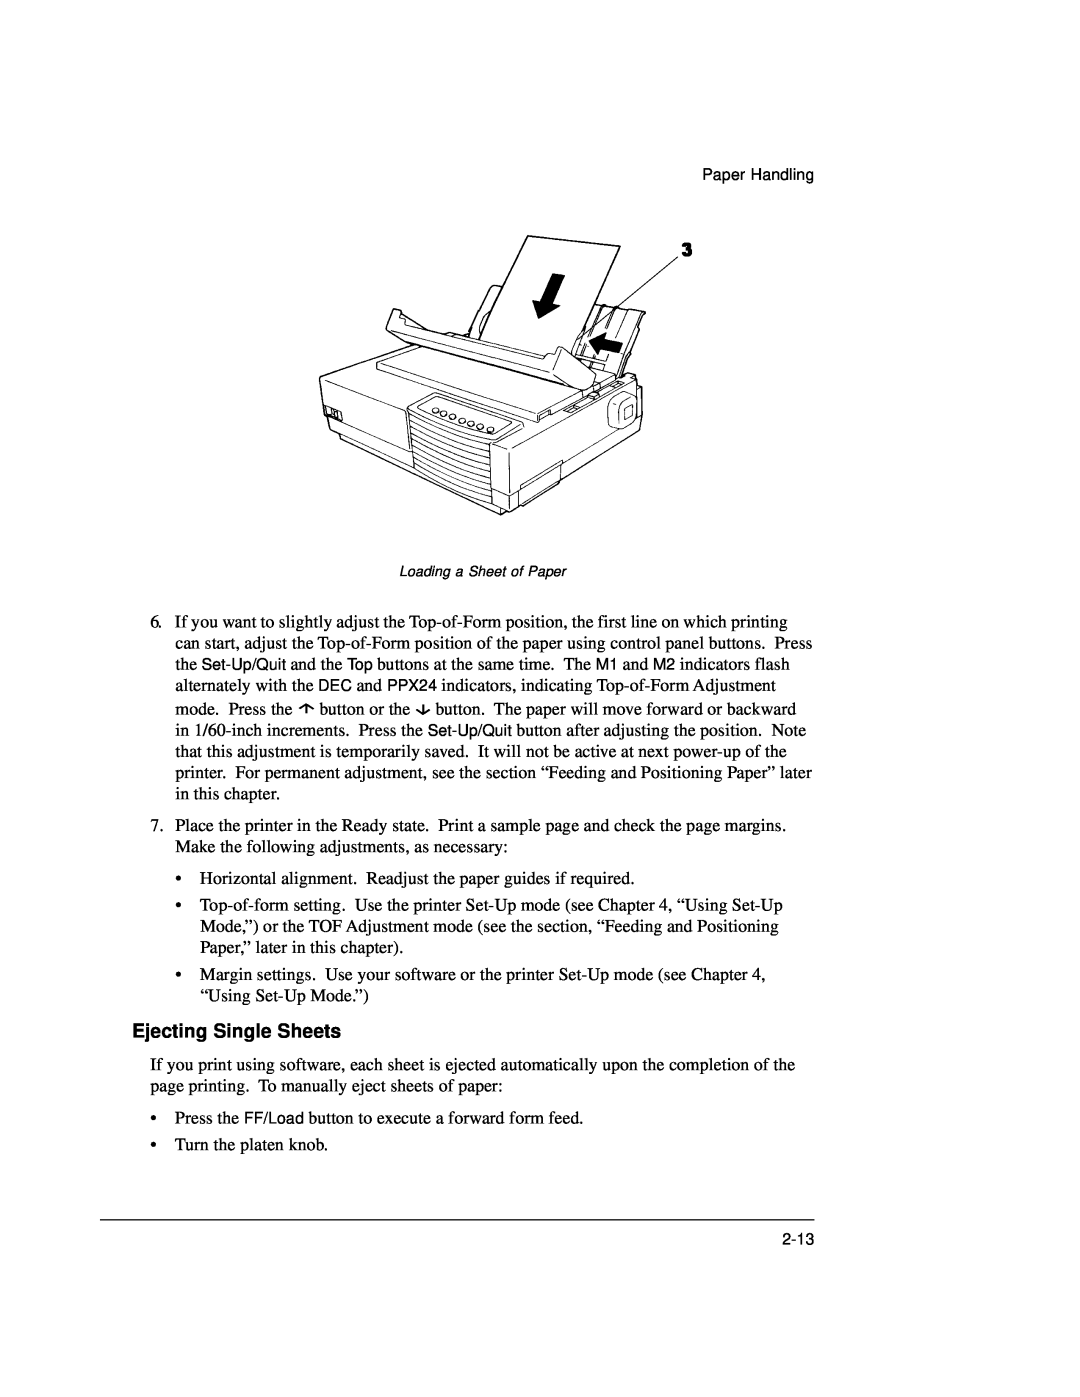 Genicom LA36 manual Ejecting Single Sheets 